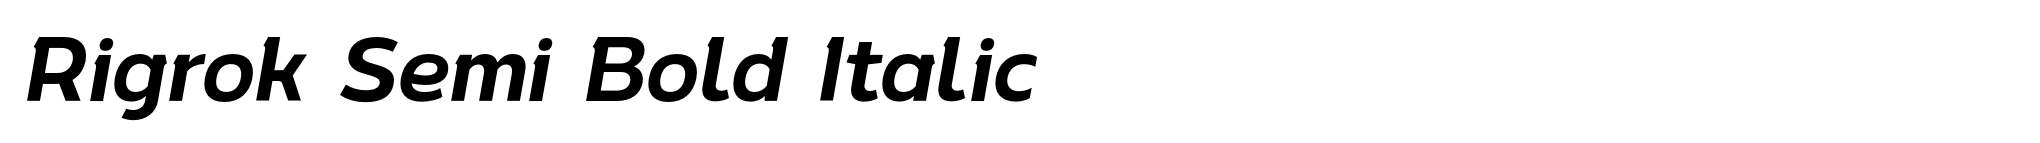 Rigrok Semi Bold Italic image